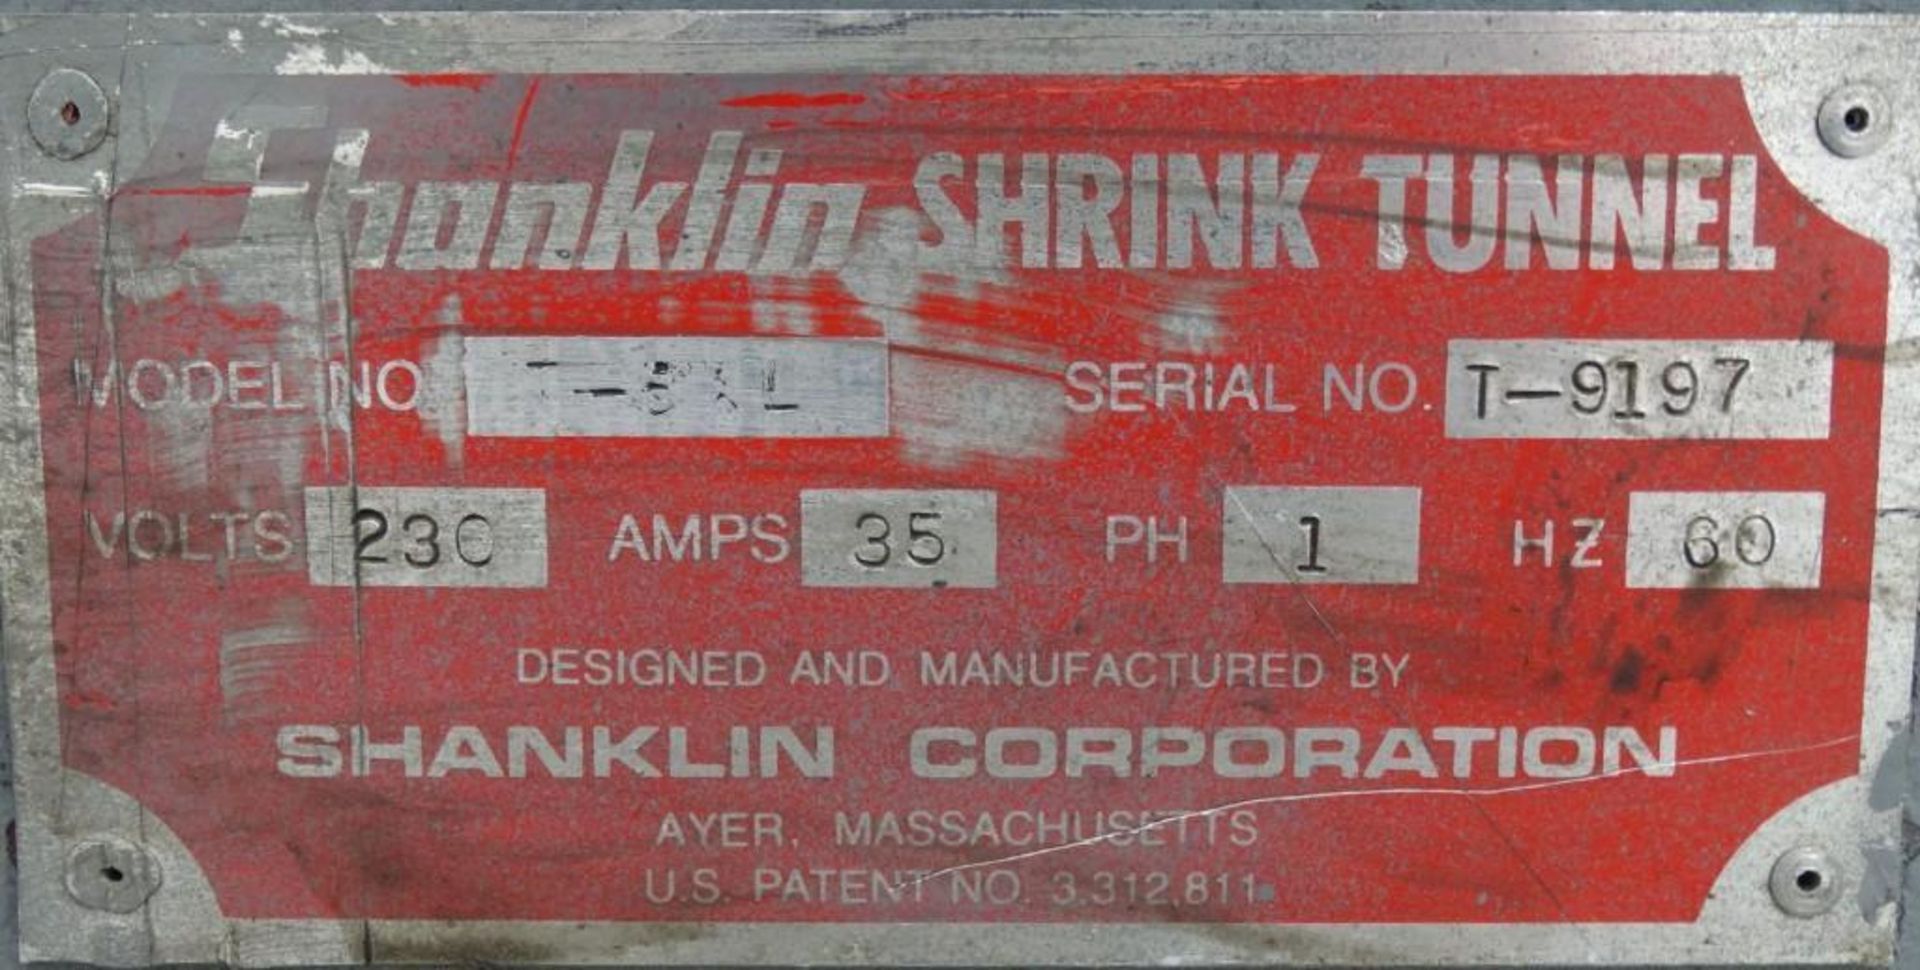 Shanklin T-6XL Heat Shrink Tunnel 18" W x 7" T - Image 7 of 7